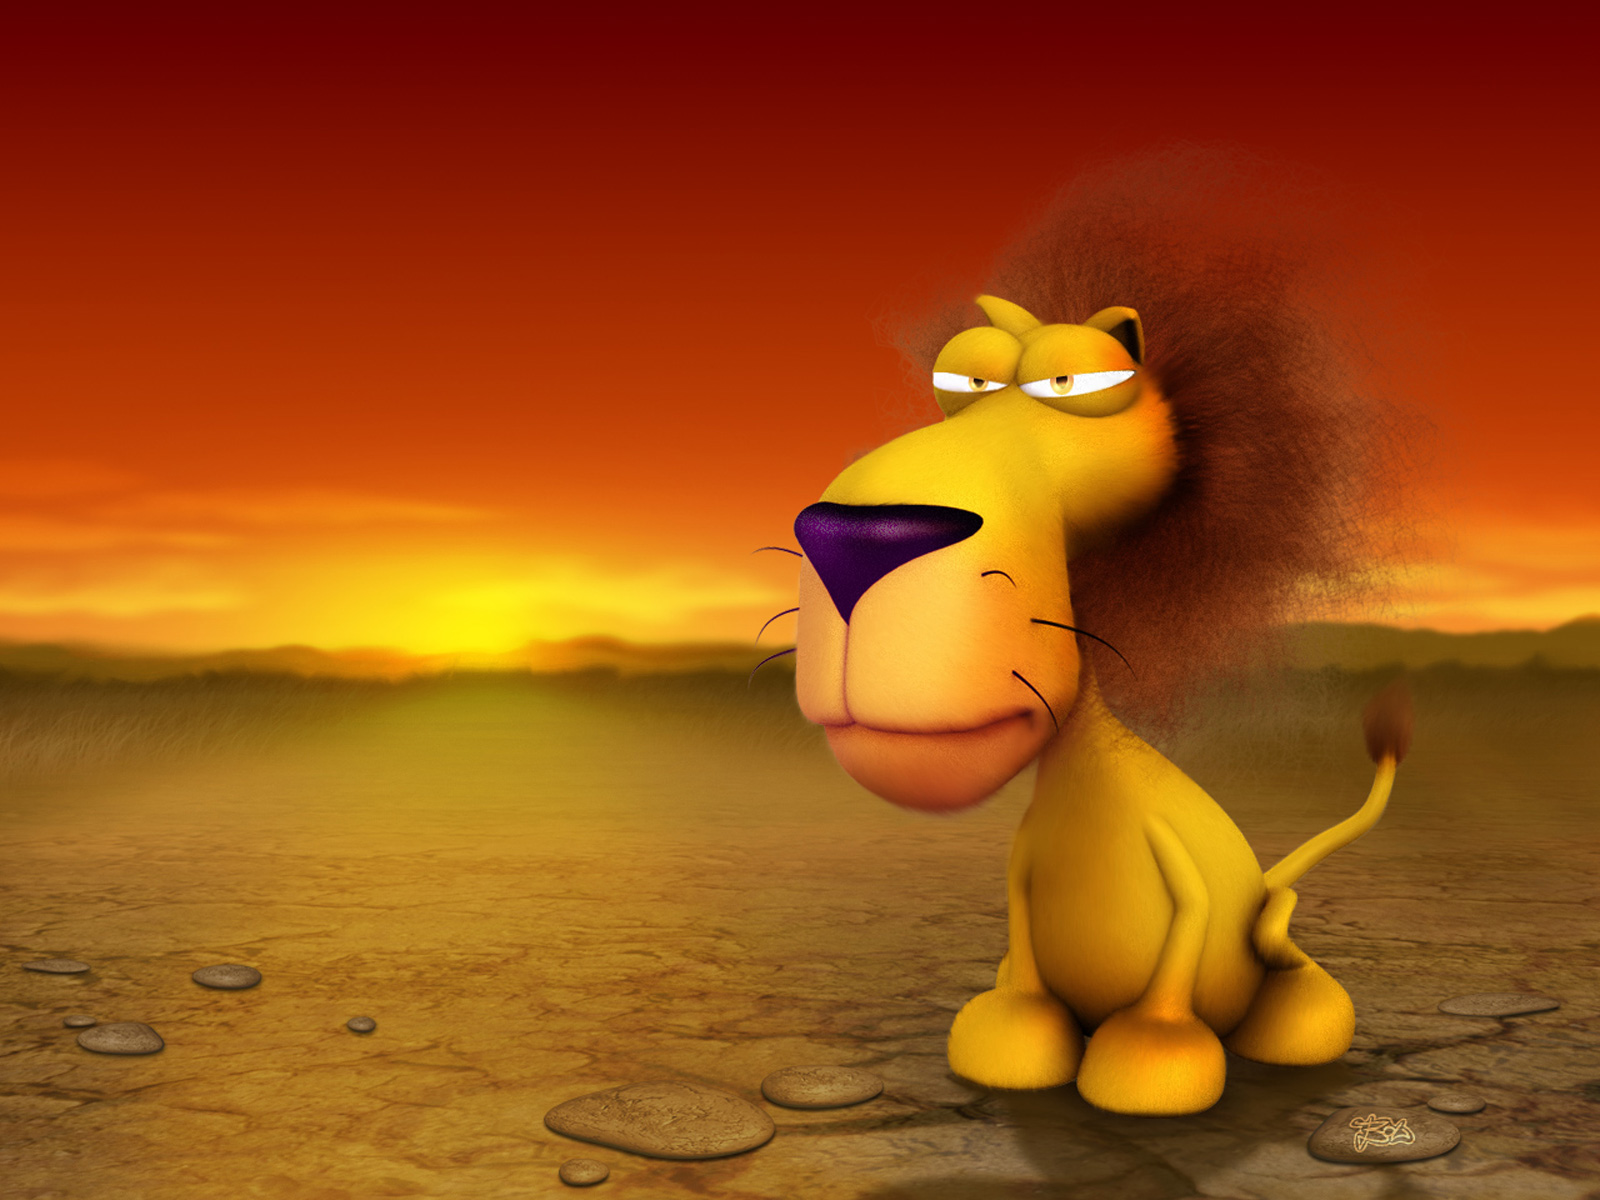 Cute Lion King Puter Desktop Wallpaper Pictures Image